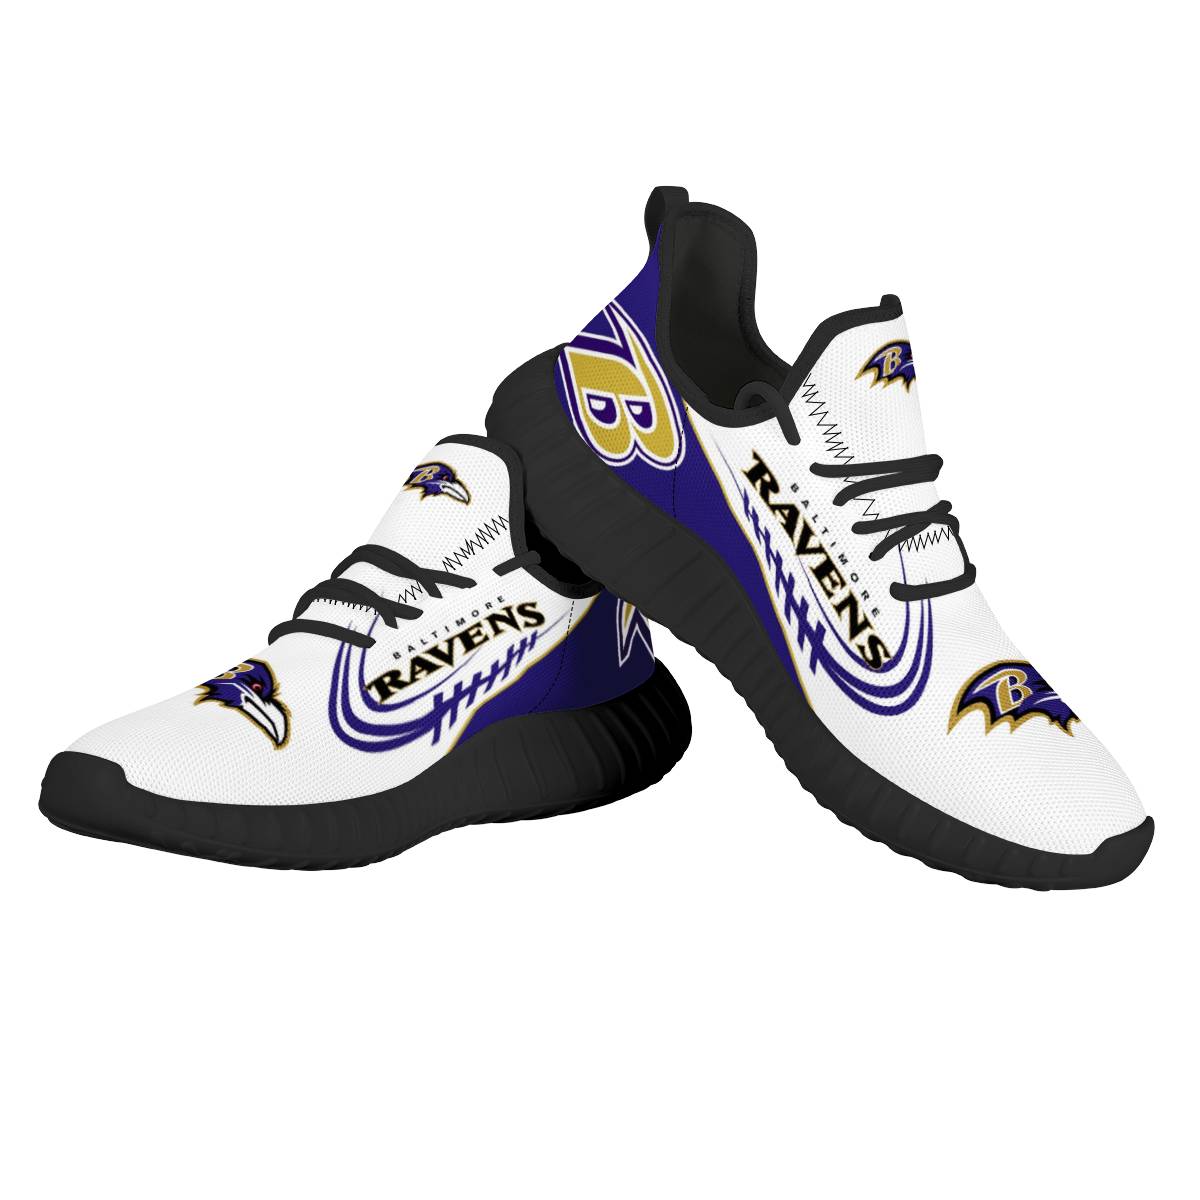 Men's NFL Baltimore Ravens Mesh Knit Sneakers/Shoes 002